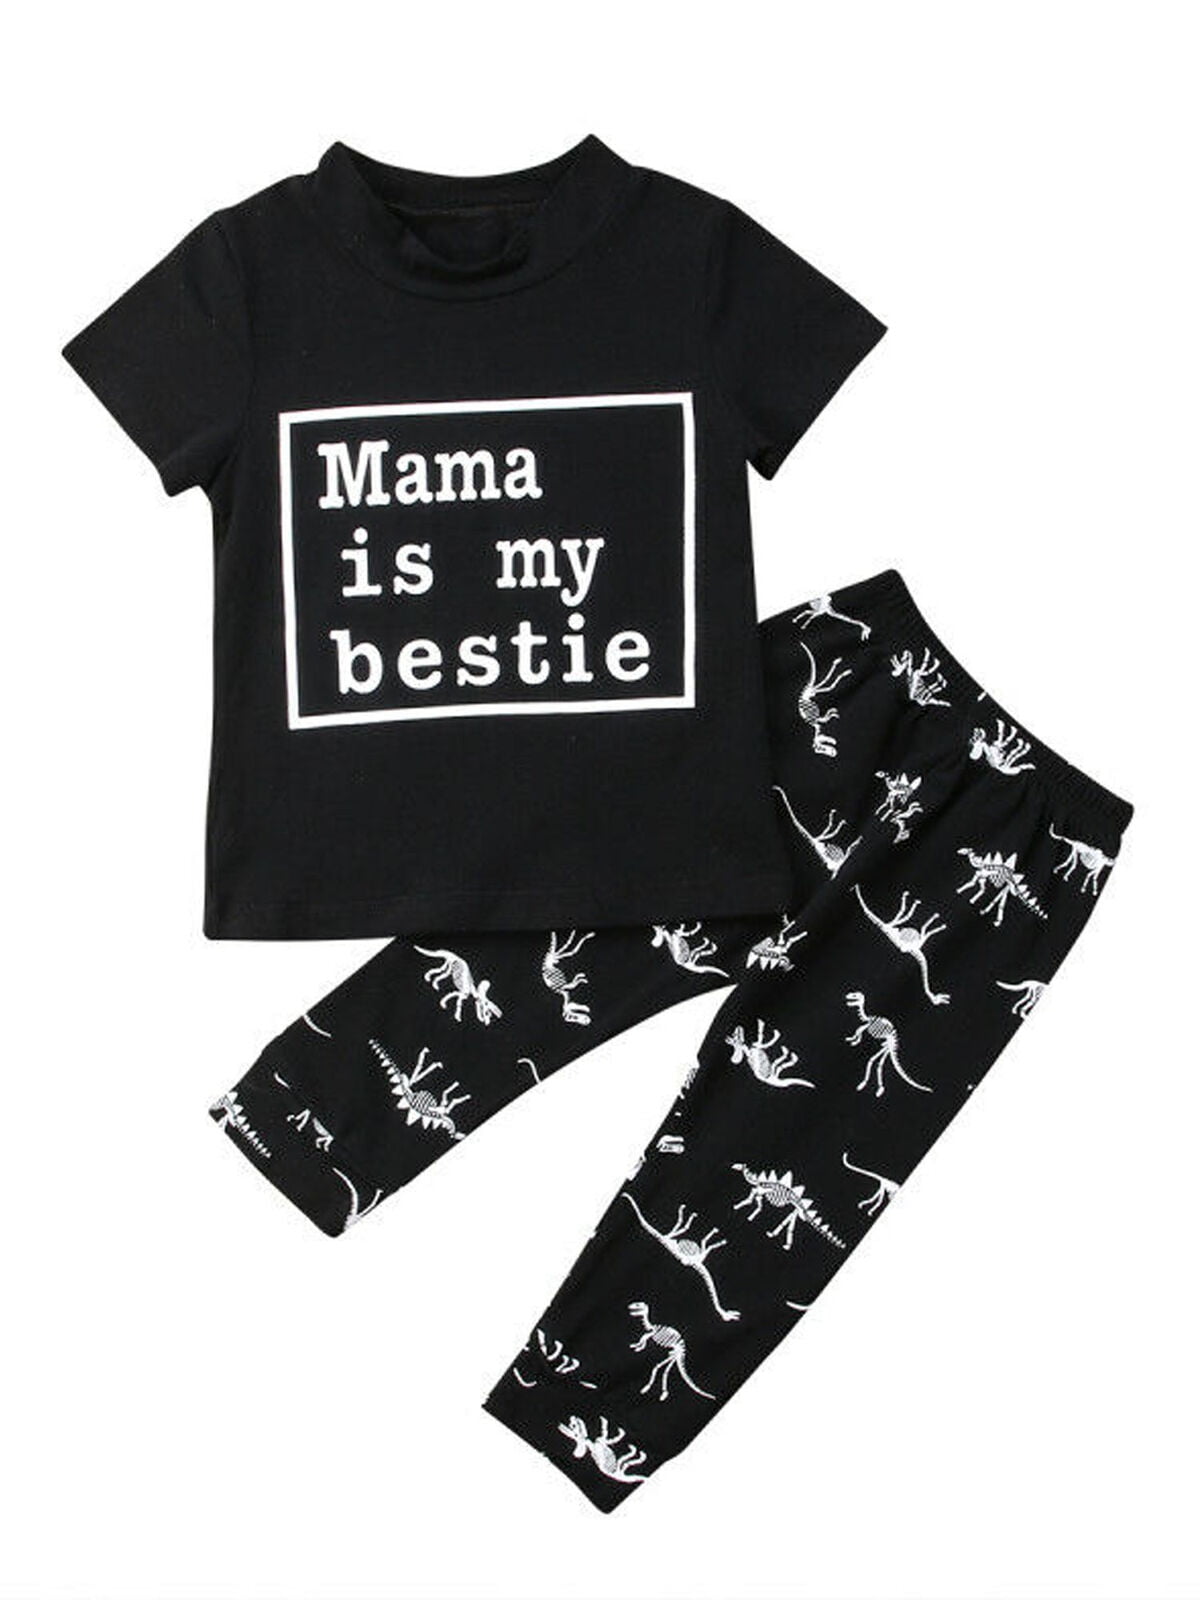 Baby Toddler Boys Girls Kids 2 Piece Dinosaur Print Sweatshirt Plaid Pants Set